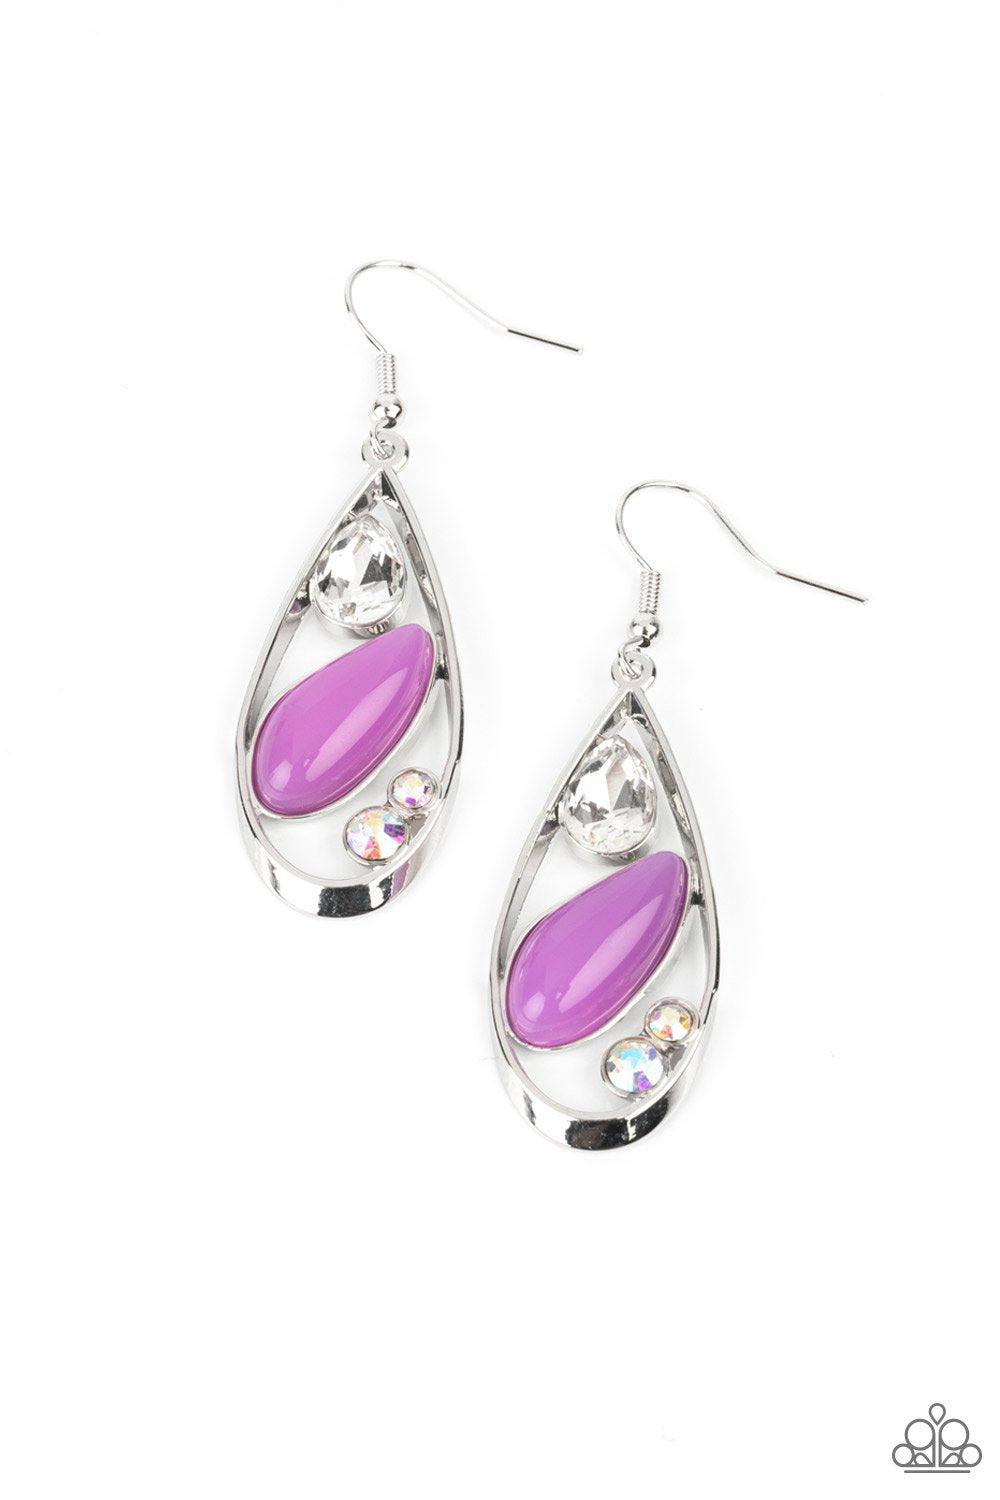 Harmonious Harbors Purple and Iridescent Rhinestone Earrings - Paparazzi Accessories- lightbox - CarasShop.com - $5 Jewelry by Cara Jewels